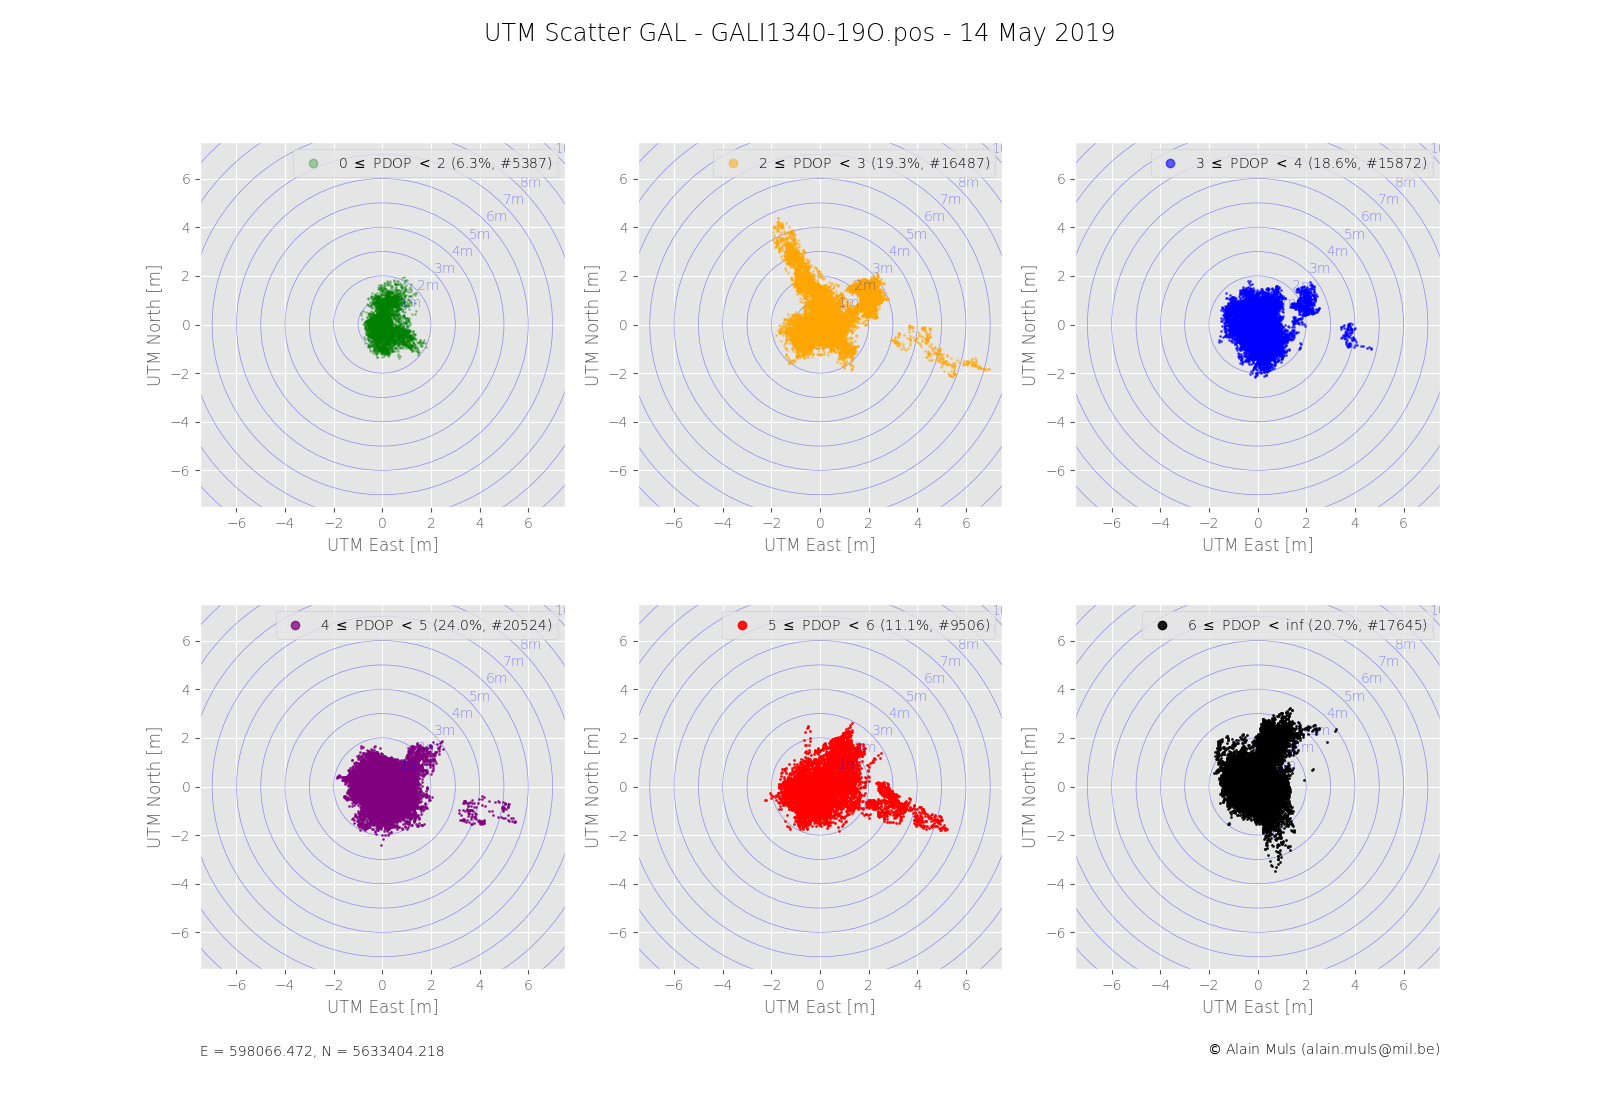 UTM East, North scatter plot per DOP bin